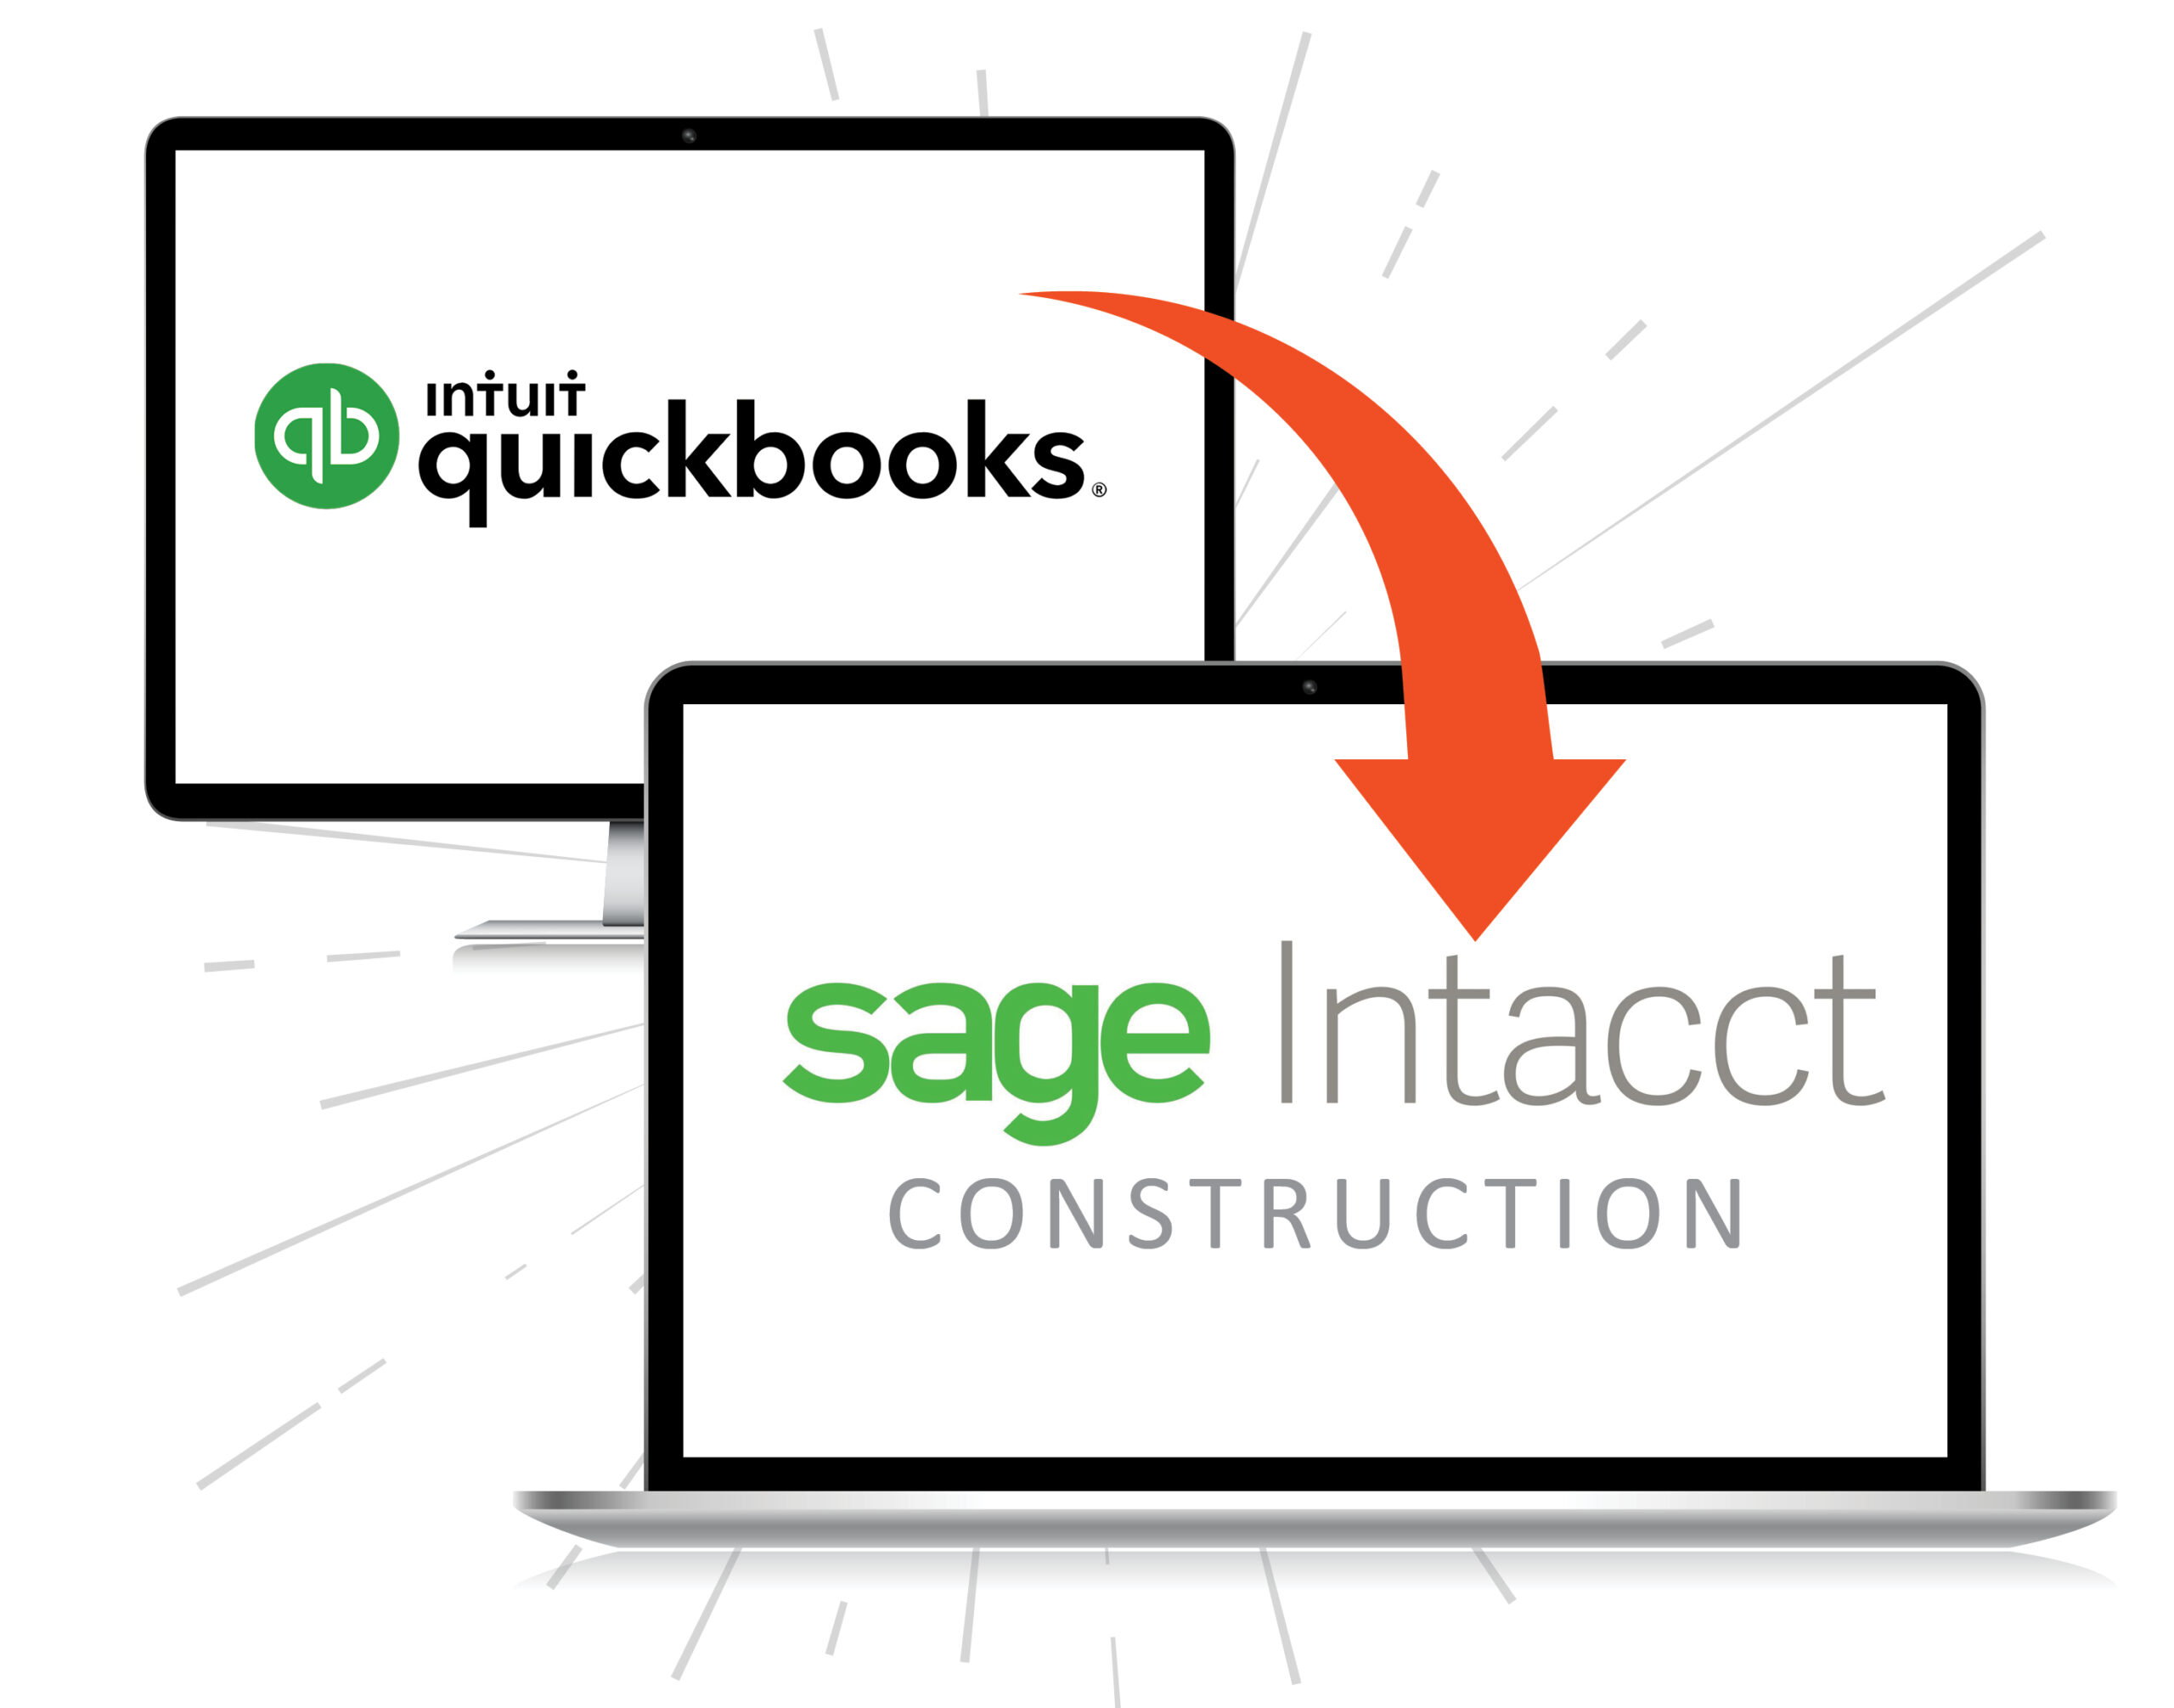 Quickbooks to Sage Intacct